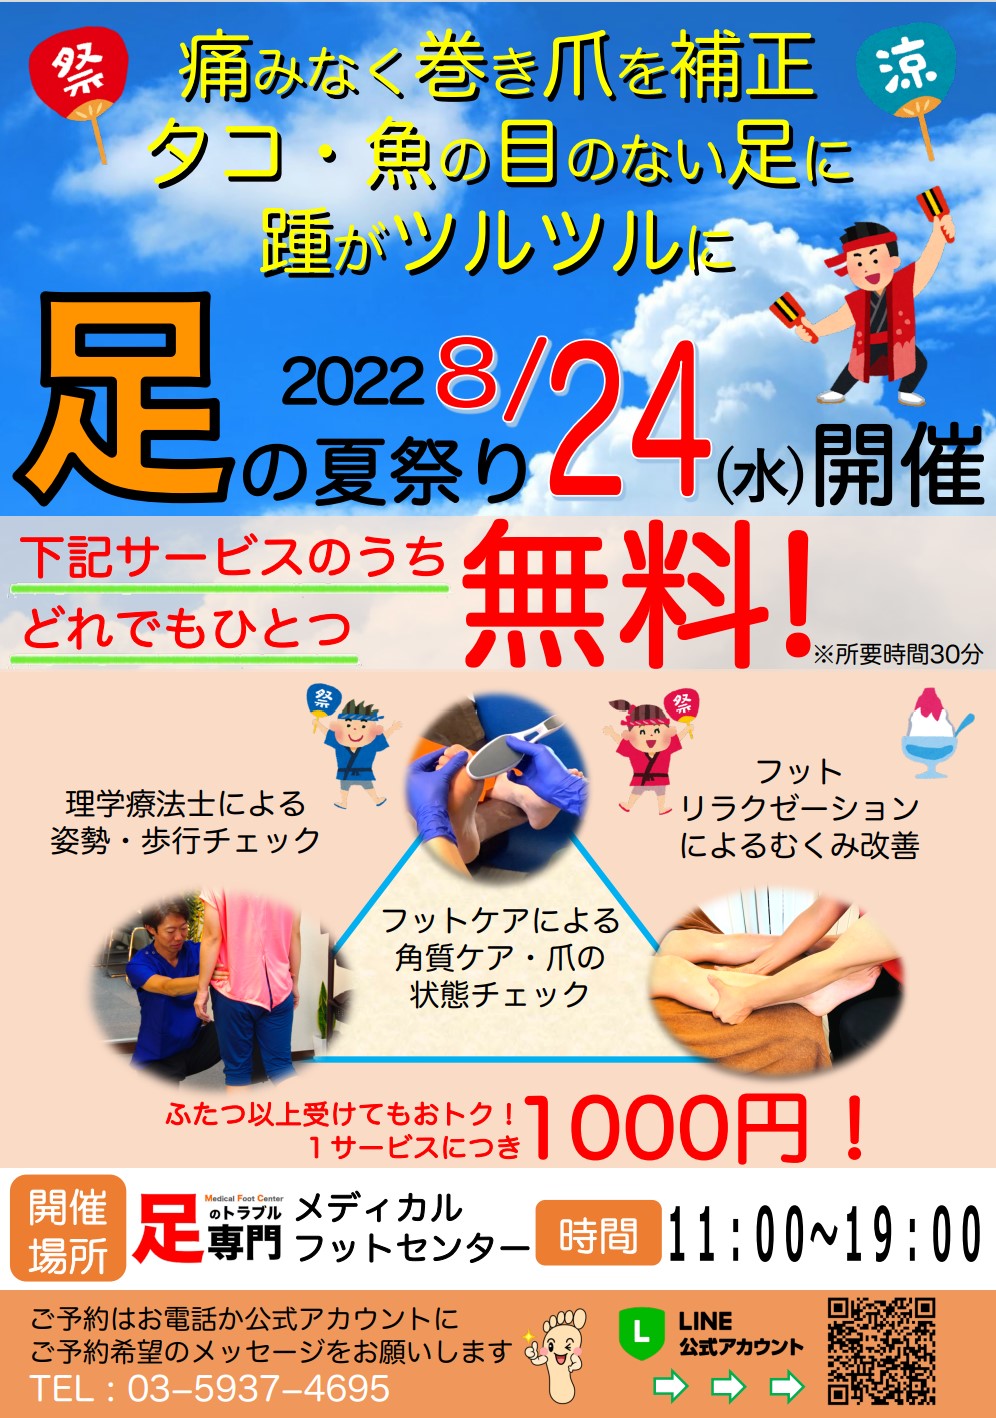 https://www.sokuiku.jp/photo/%E3%80%90MFS%E3%80%912022-08-16%20120149.jpg